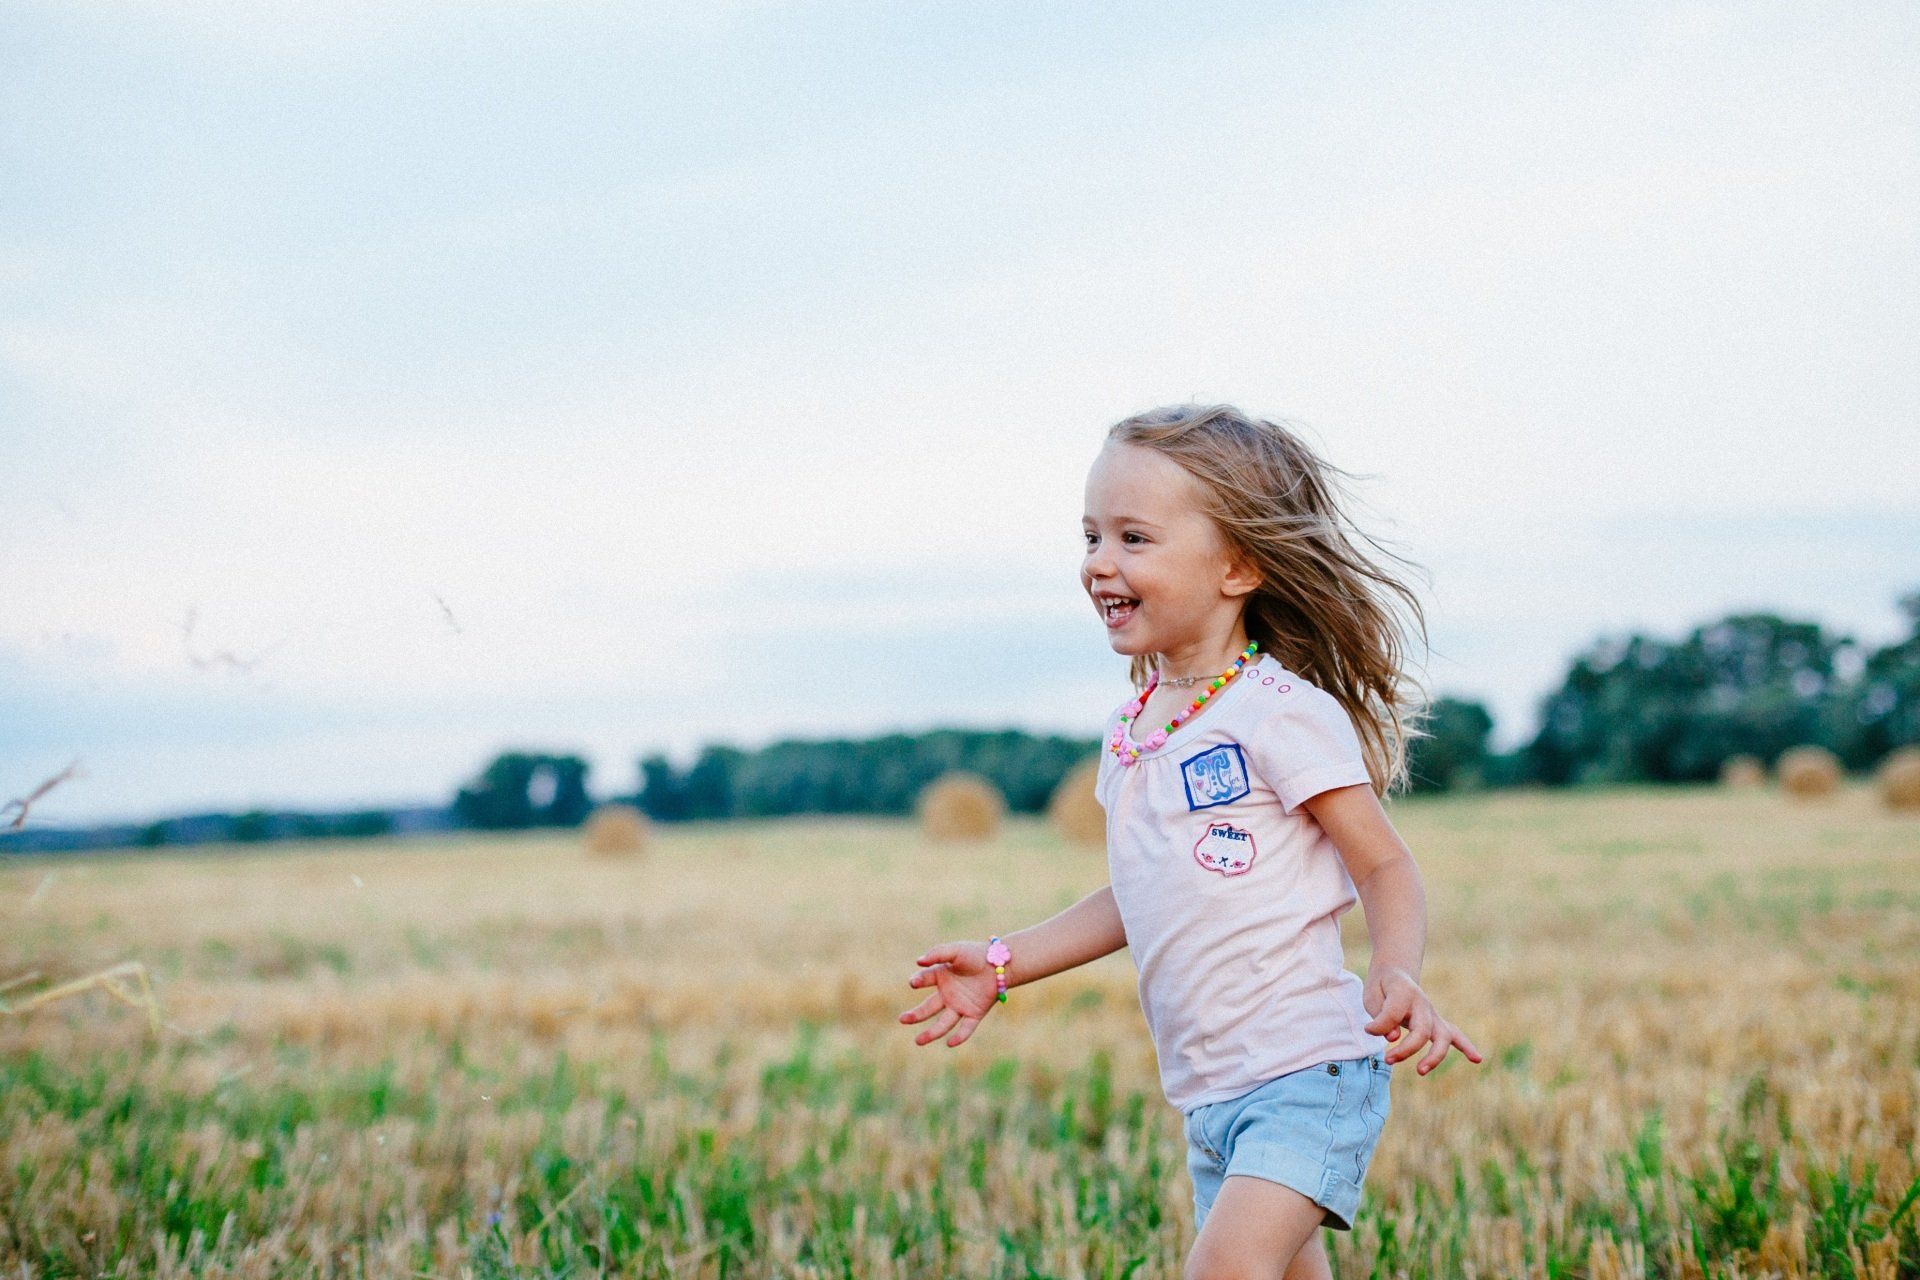 A little girl is running in a field of hay.